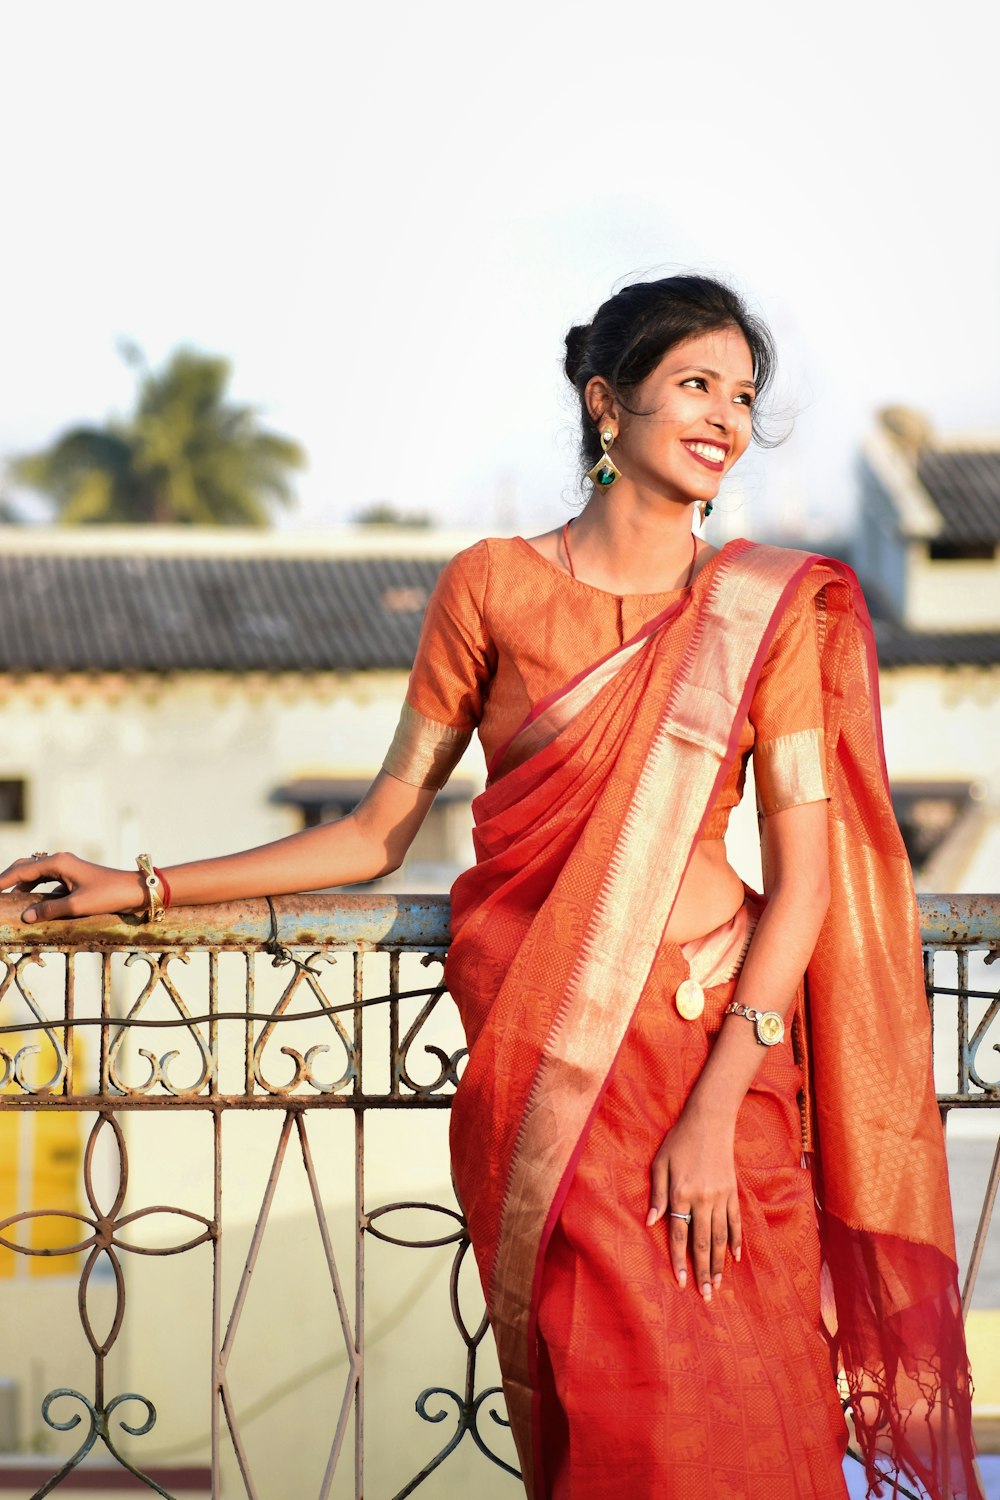 Une femme en sari orange debout sur un balcon